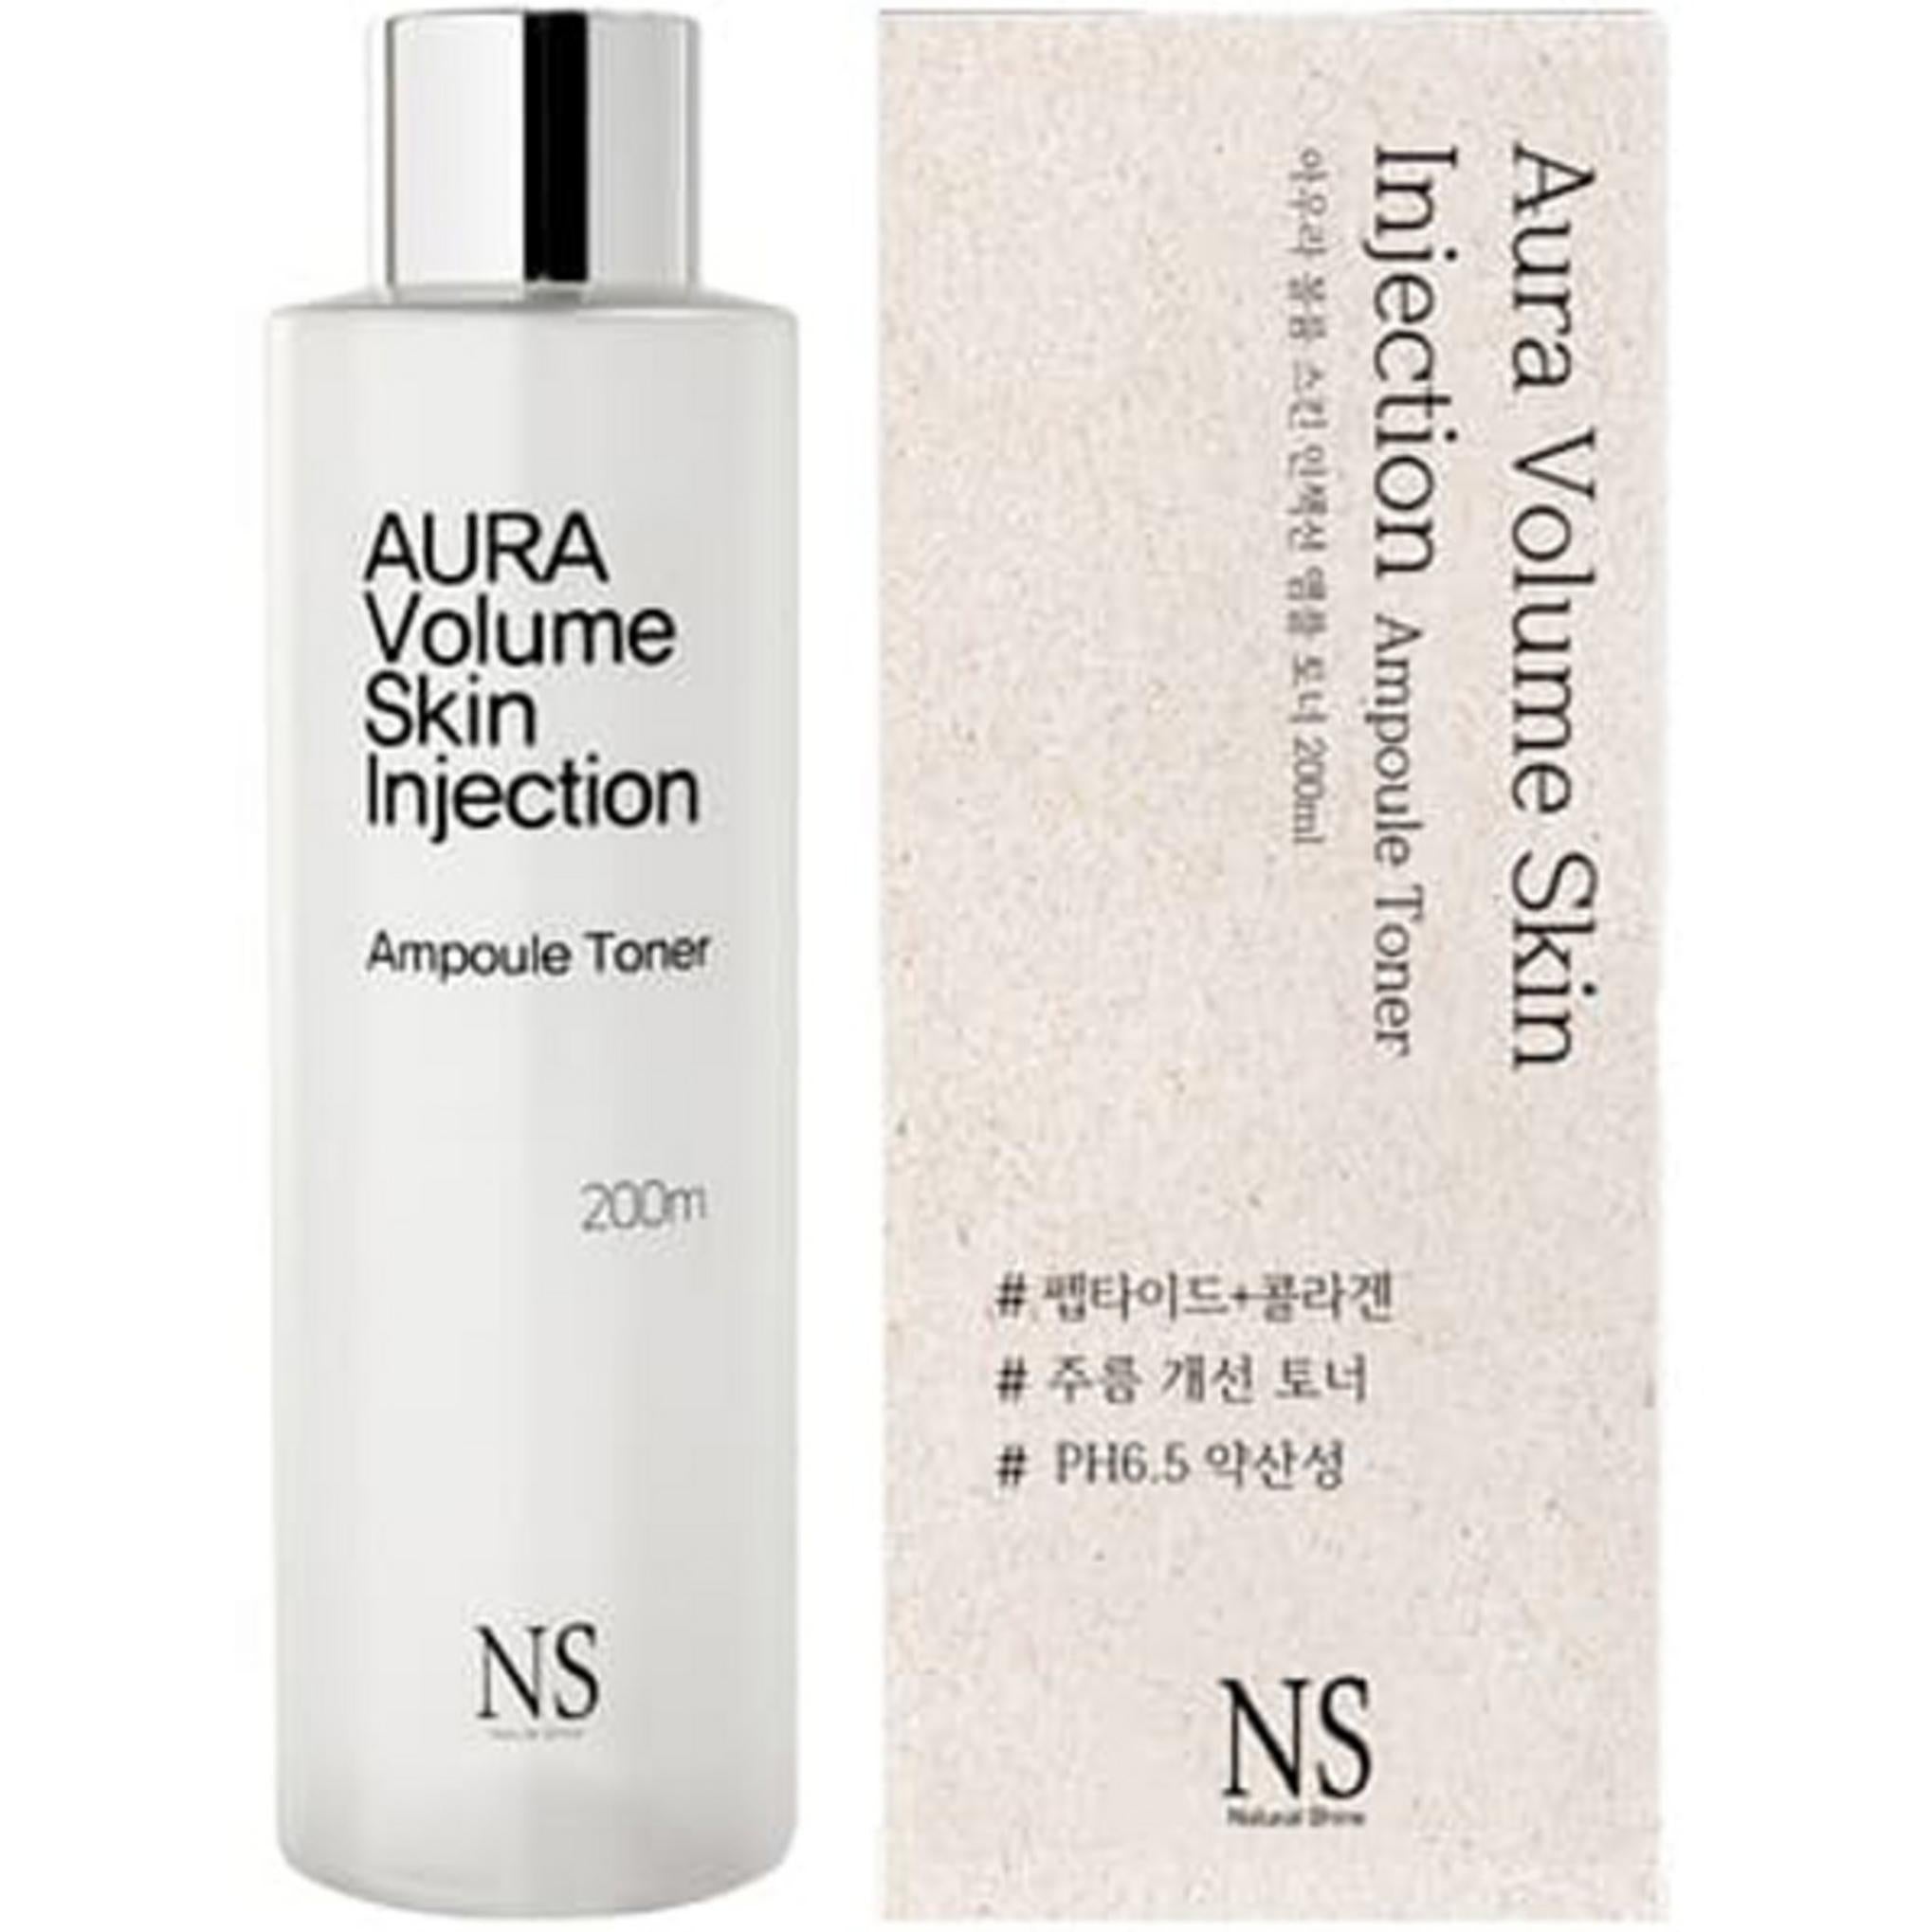 Natural Shine Aura Volume Skin Injection Ampoule Toner 200ml